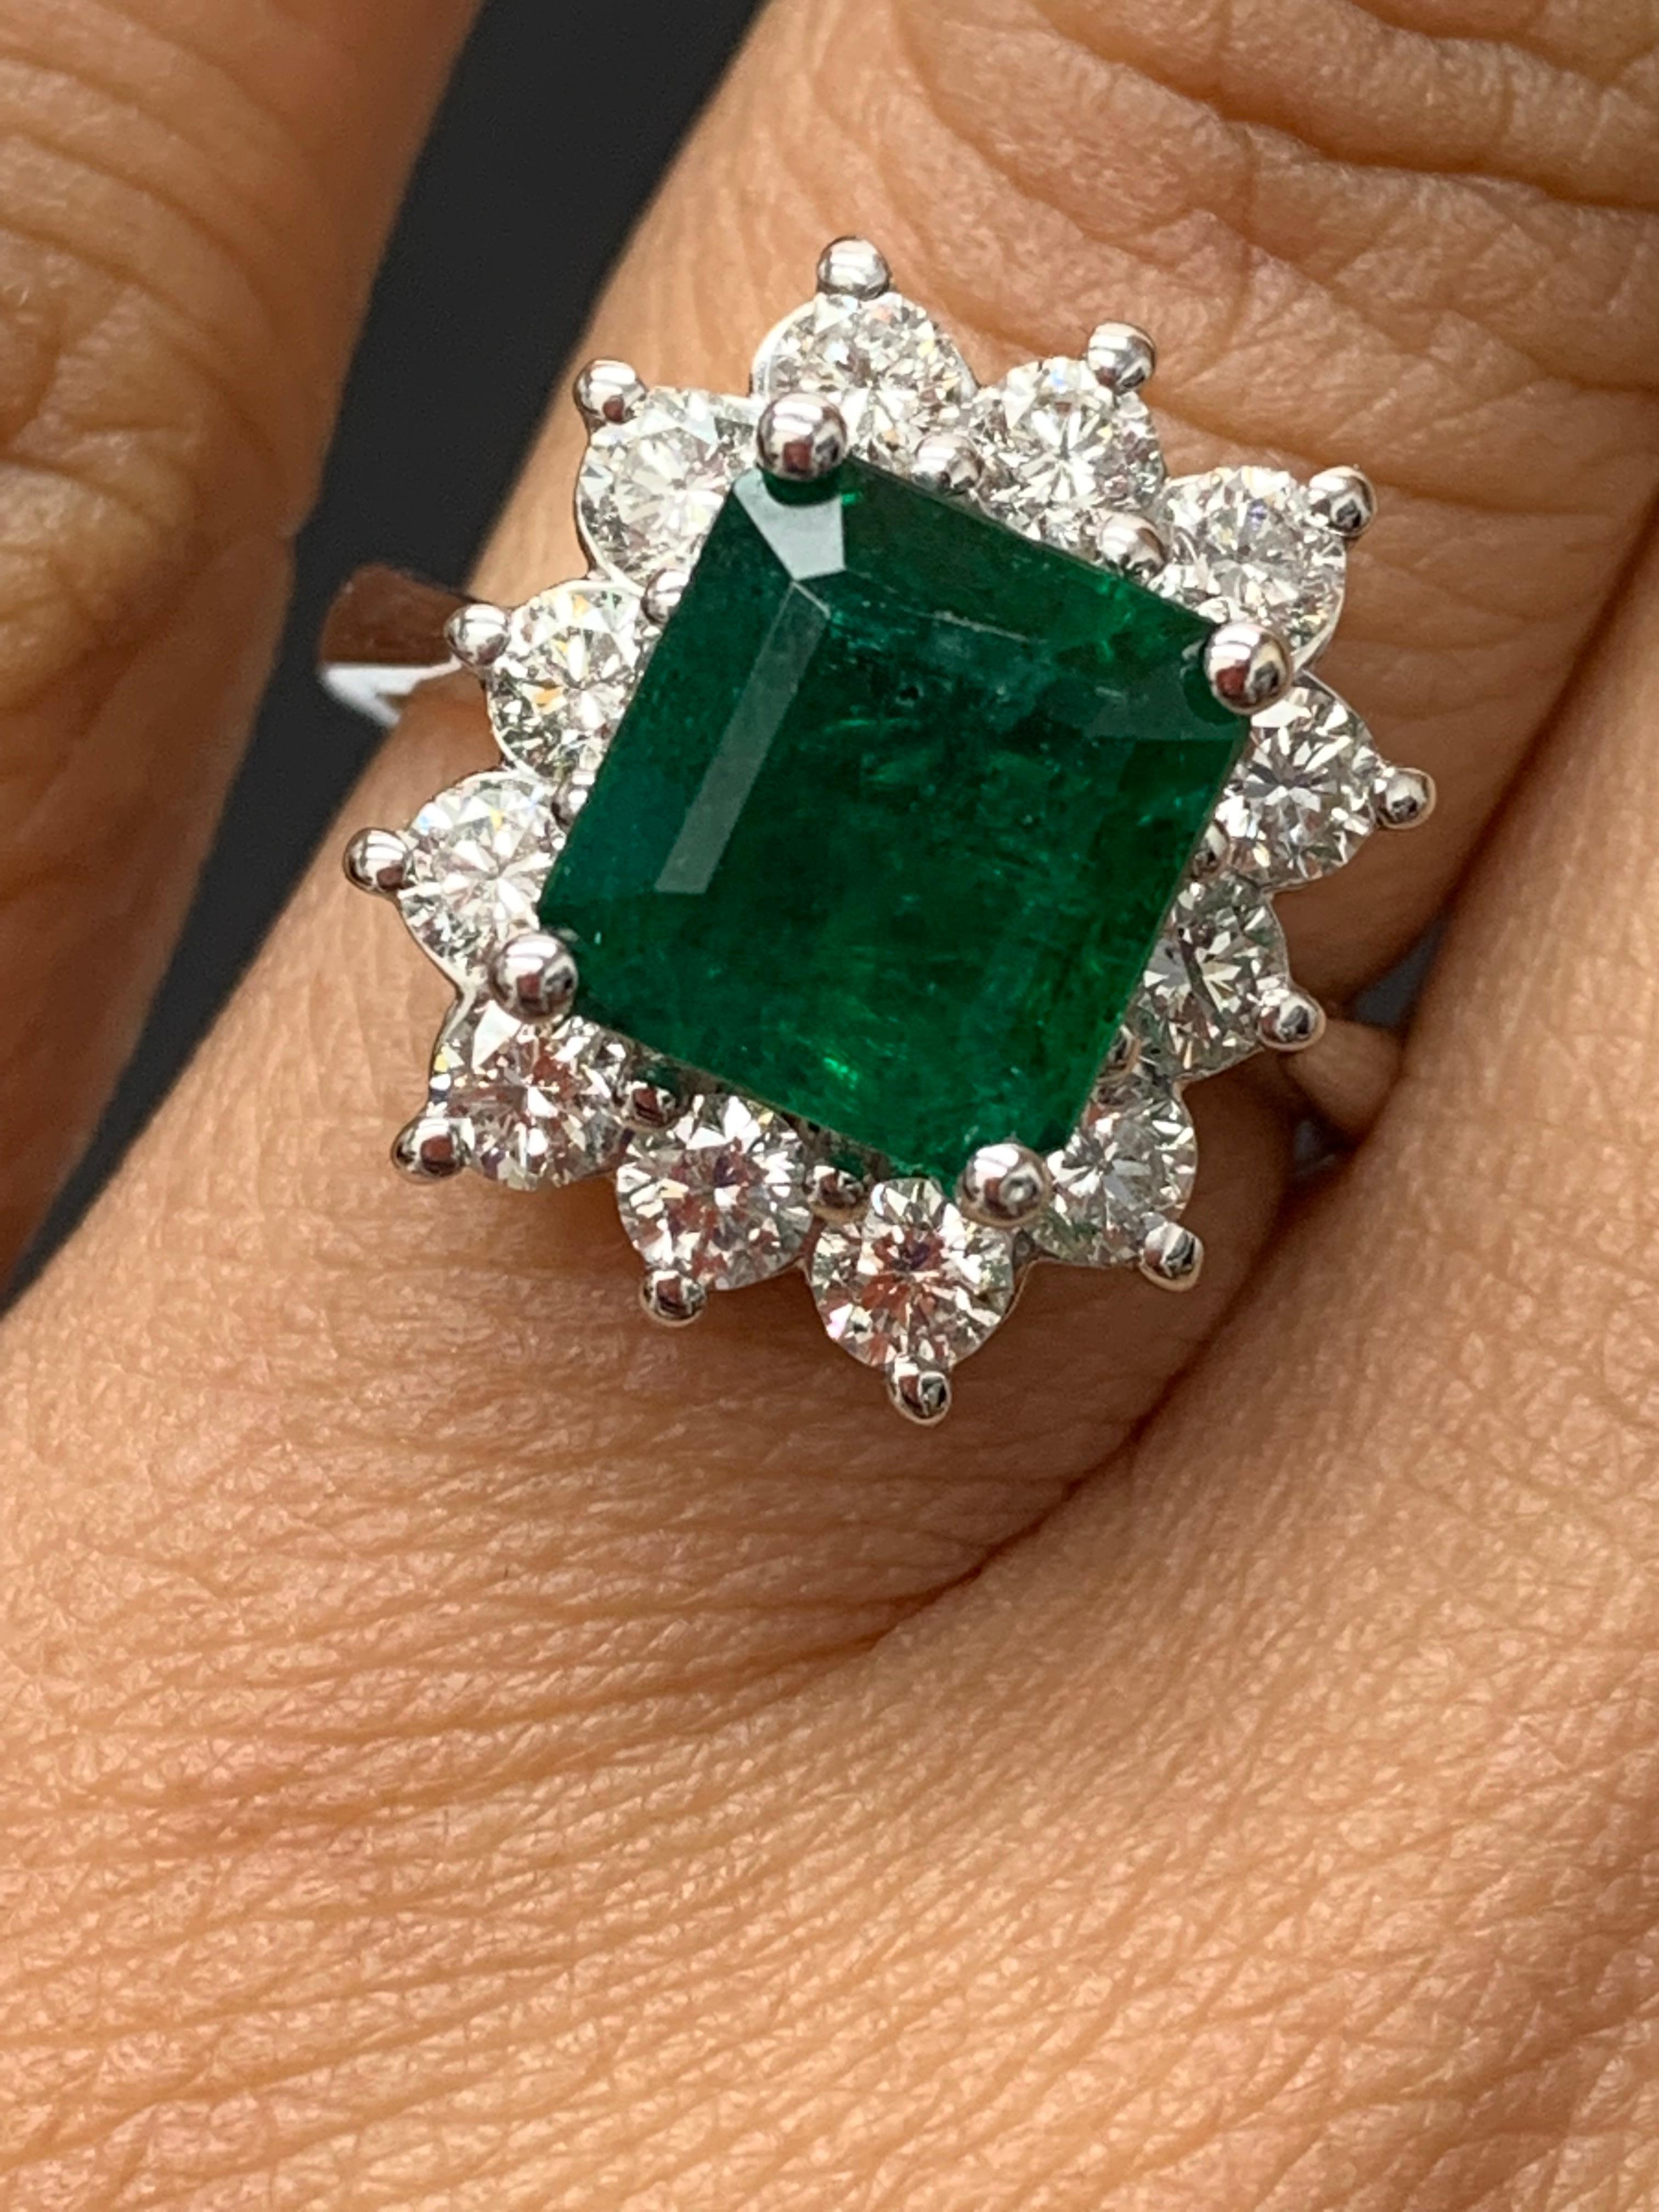 Certified 3.17 Carat Emerald Cut Emerald Diamond Ring in 14K White Gold For Sale 5